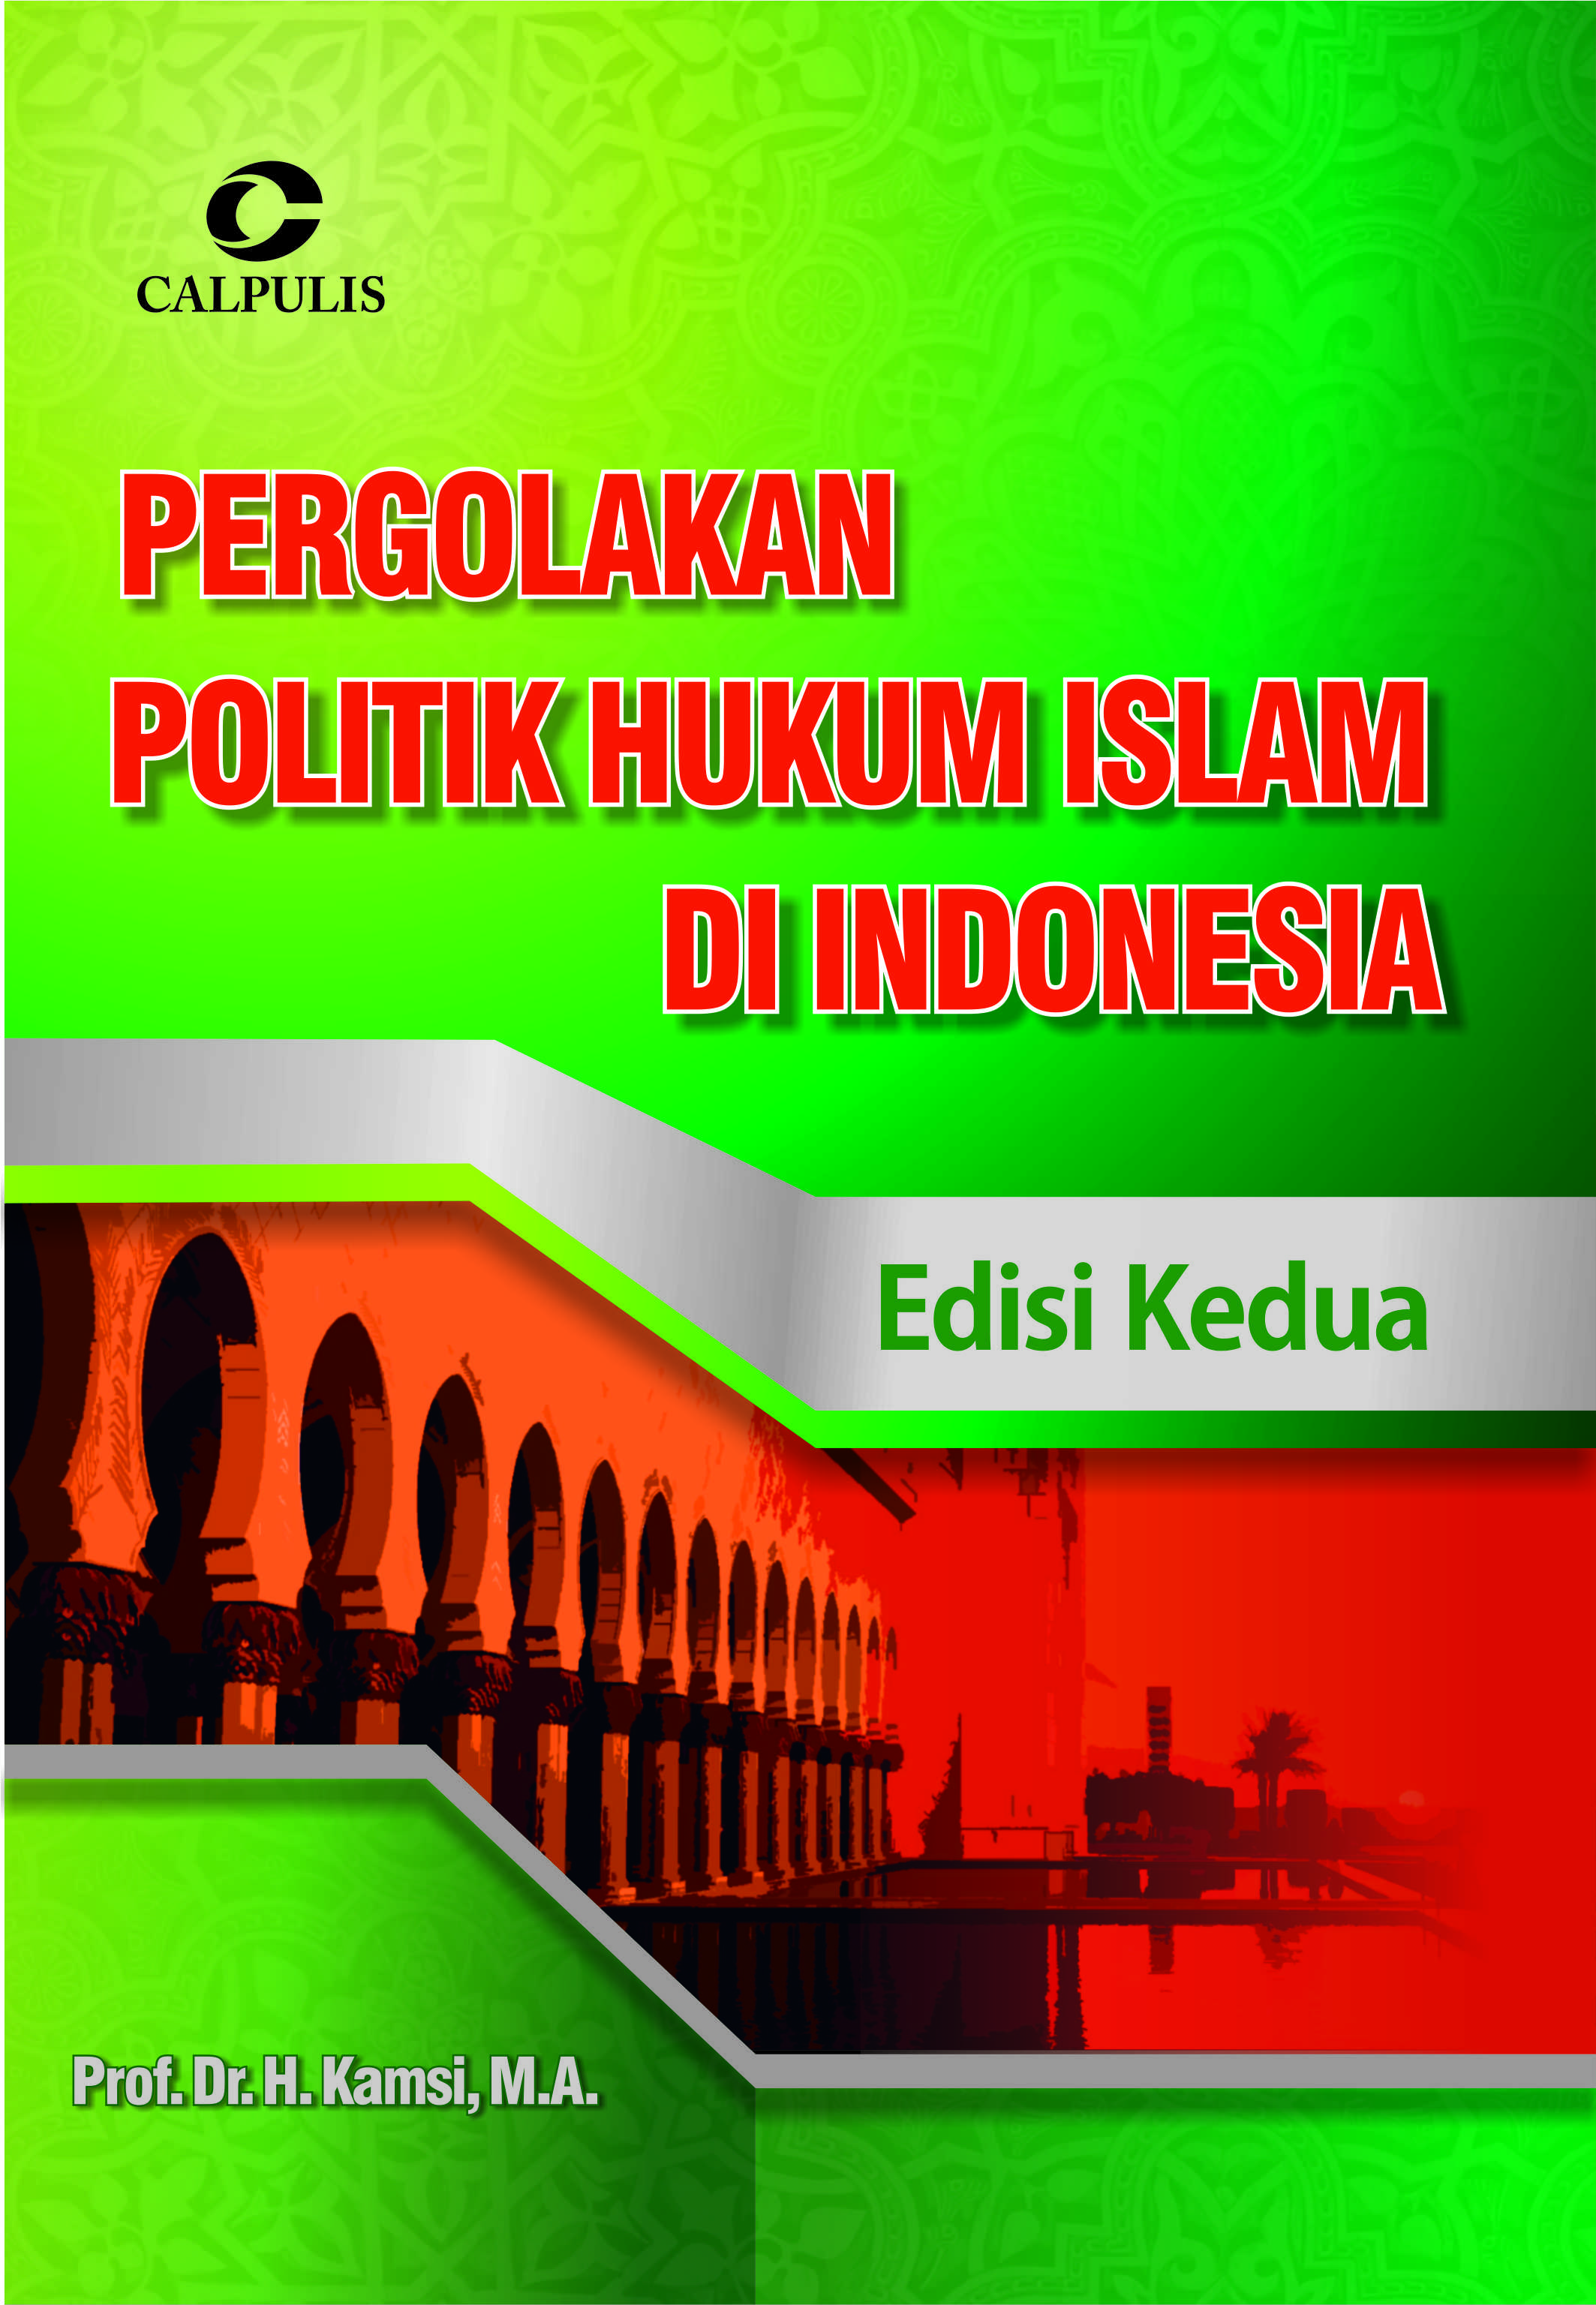 Pergolakan politik hukum Islam di Indonesia [sumber elektronis]